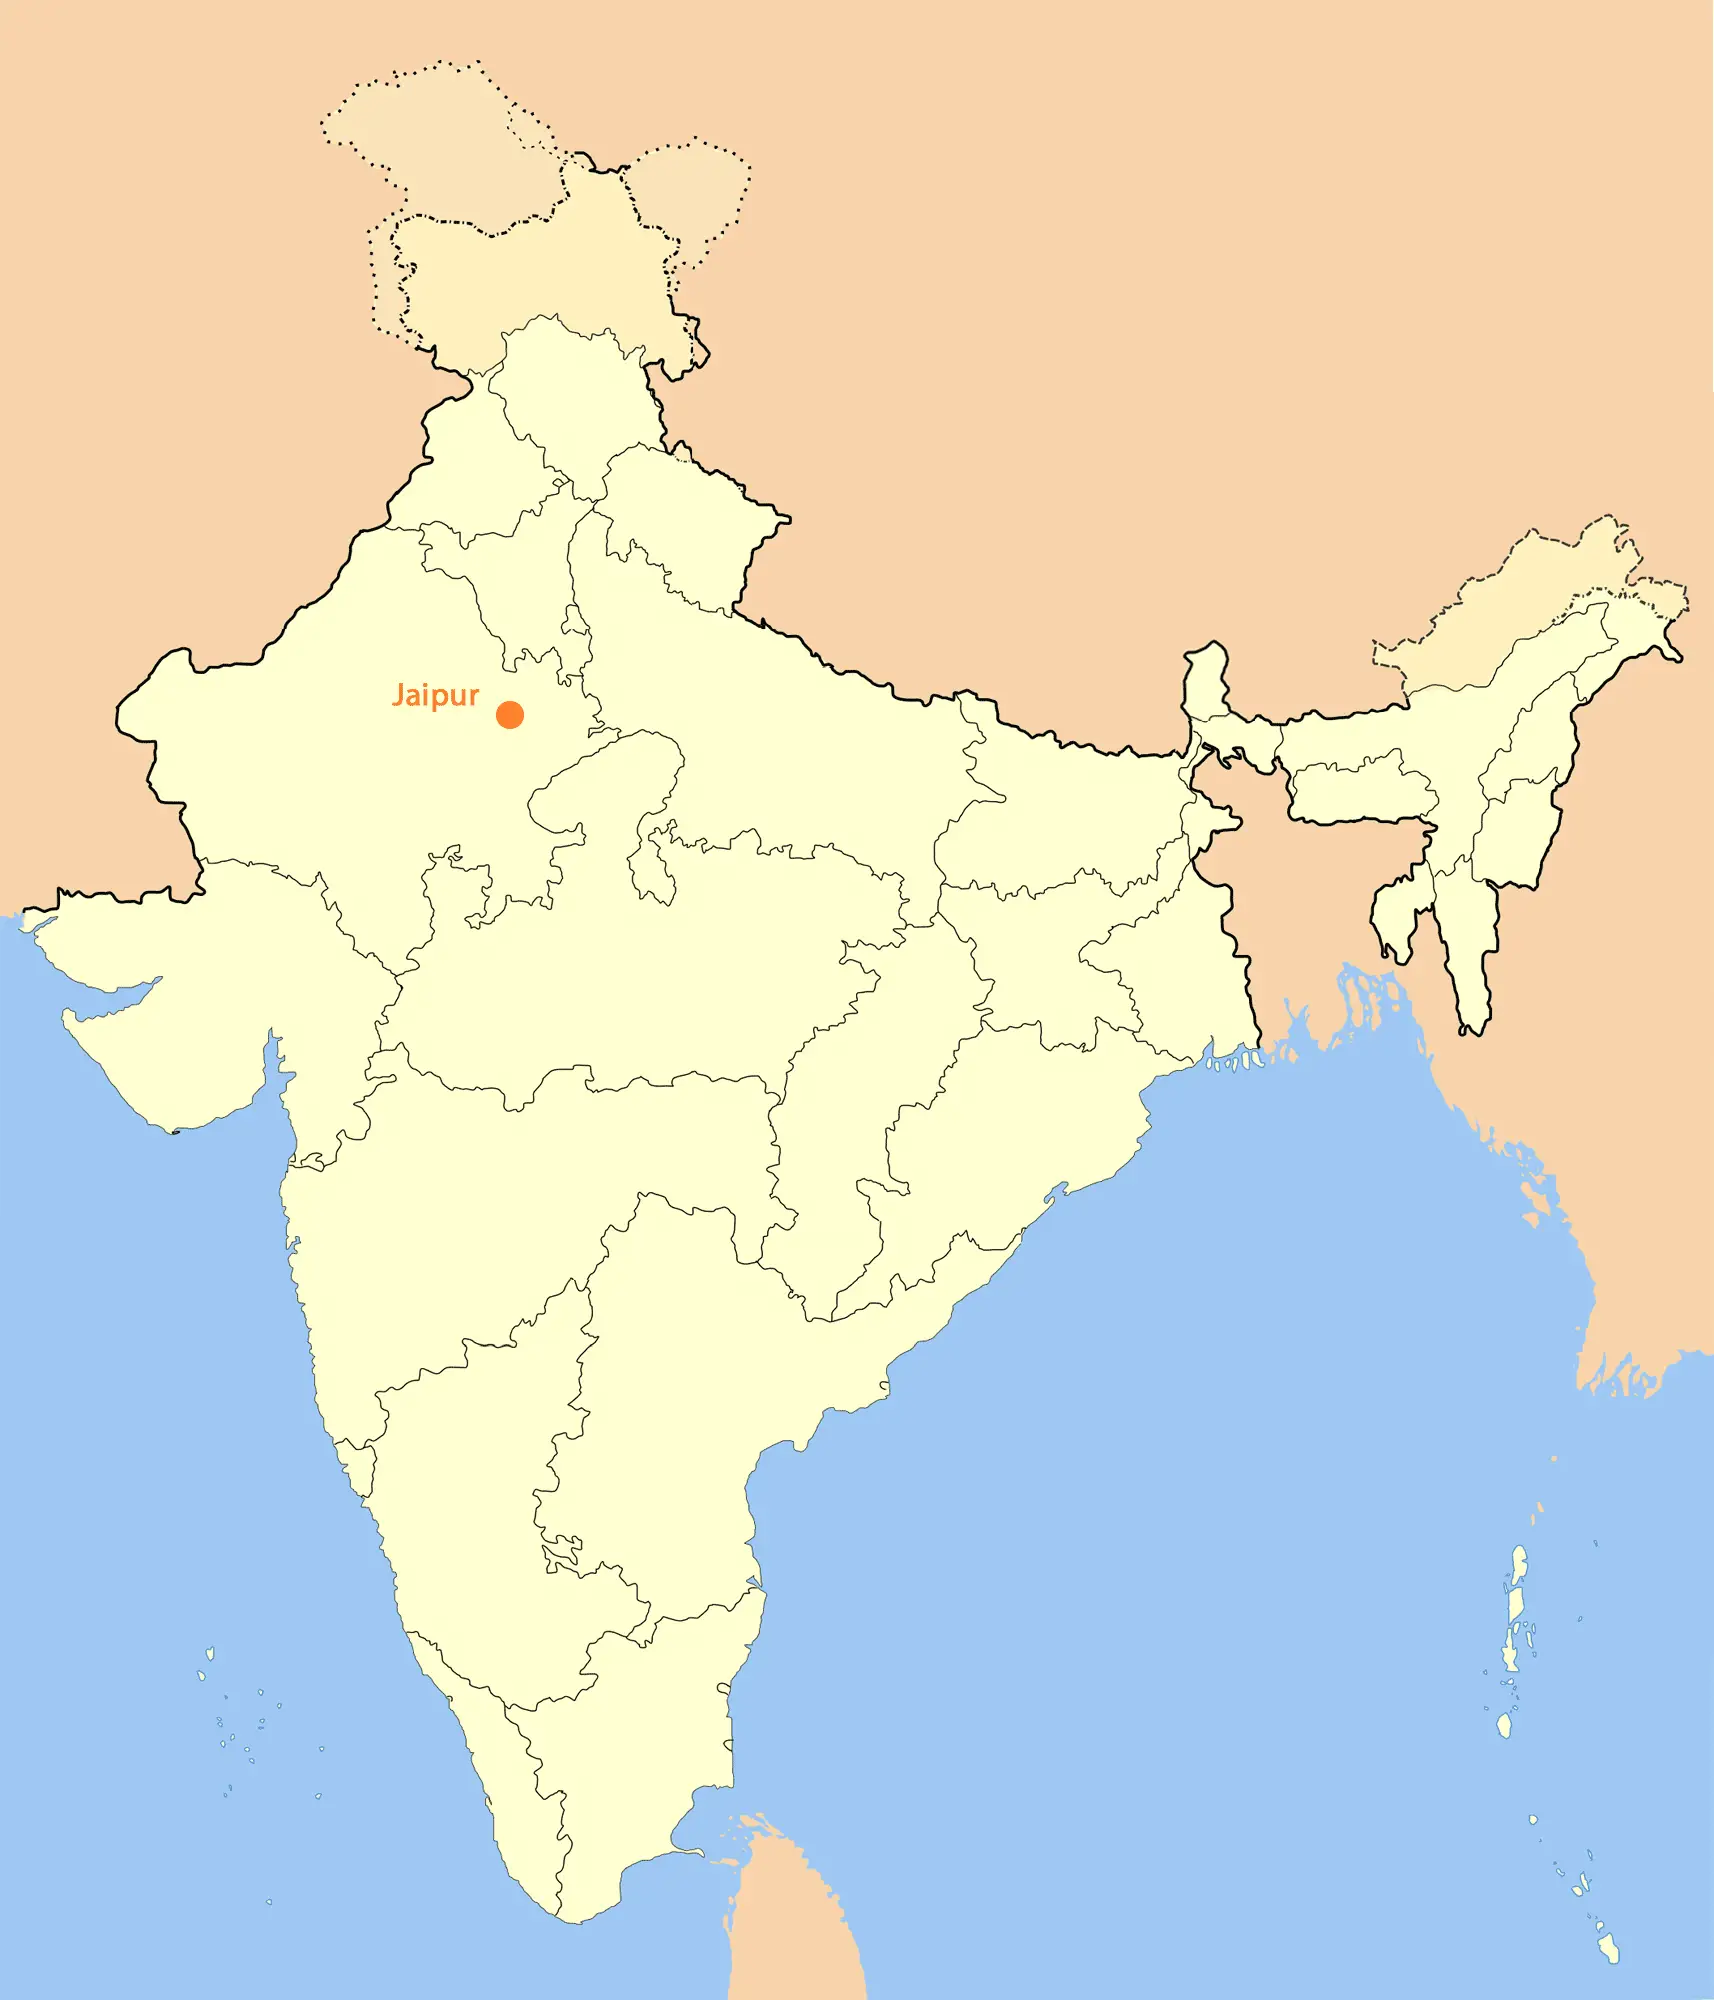 Location Map of Jaipur • Mapsof.net